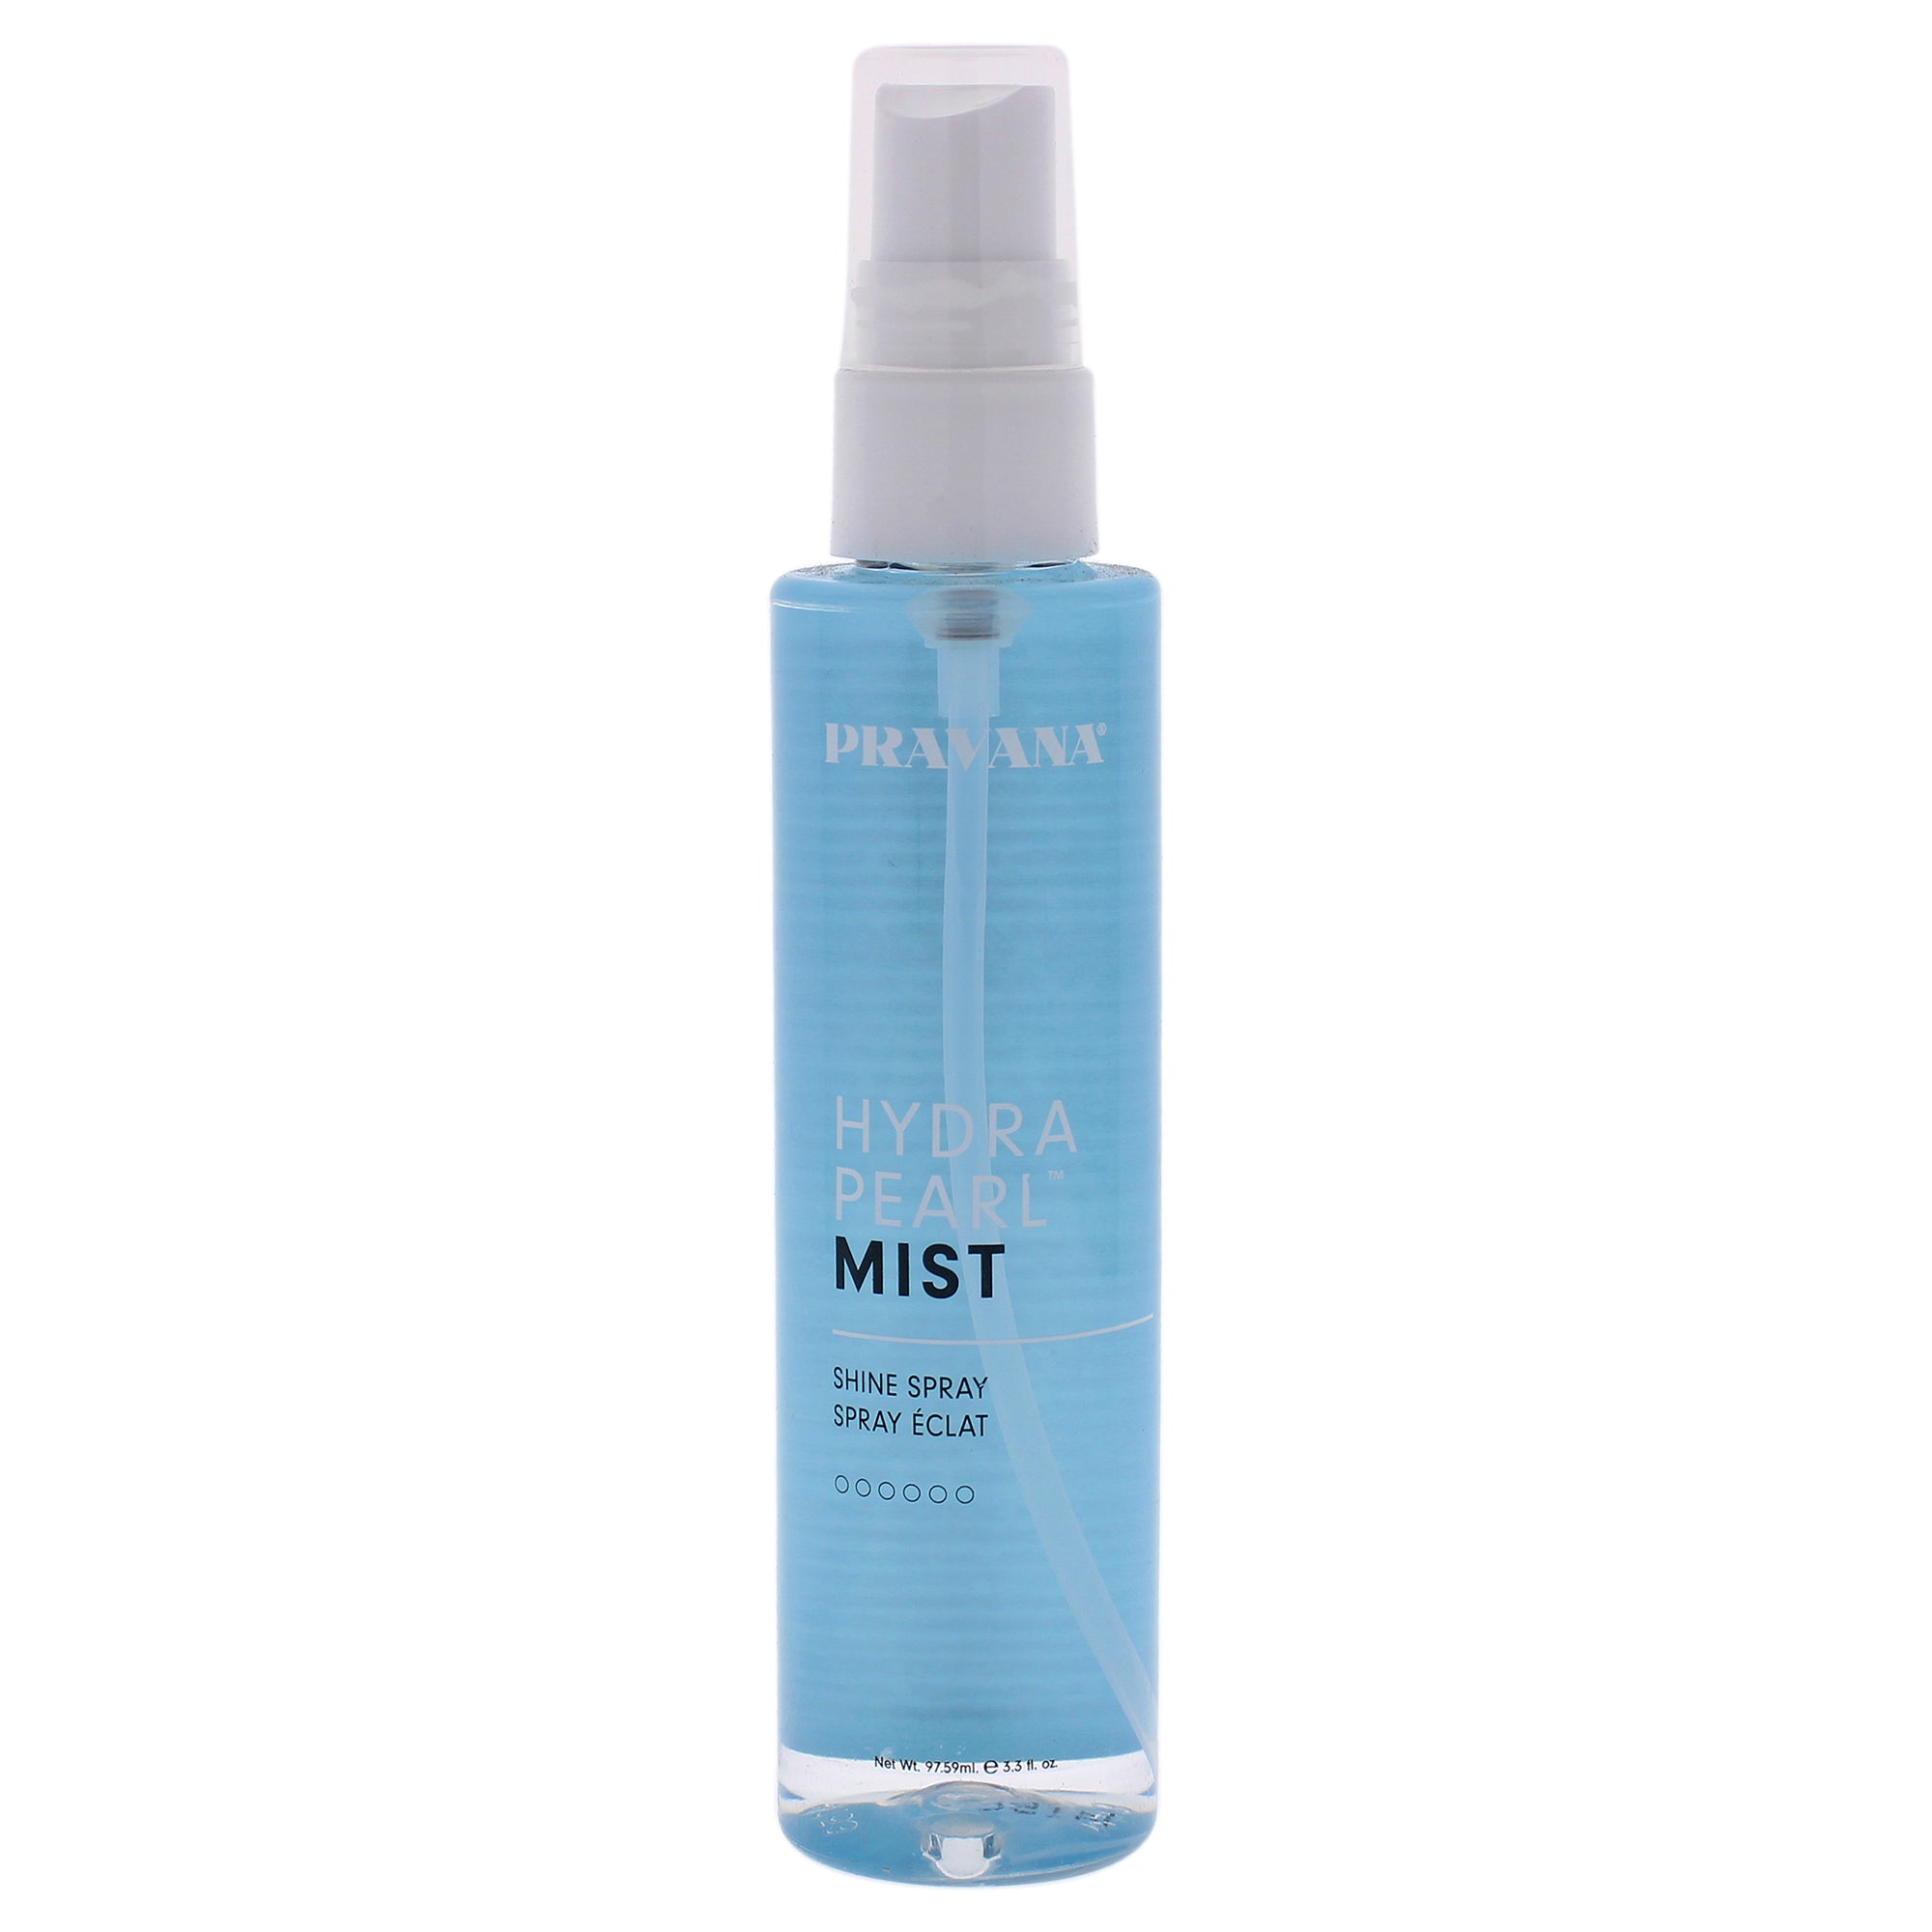 Hydra Pearl Mist by Pravana for Unisex - 3.3 oz Hairspray